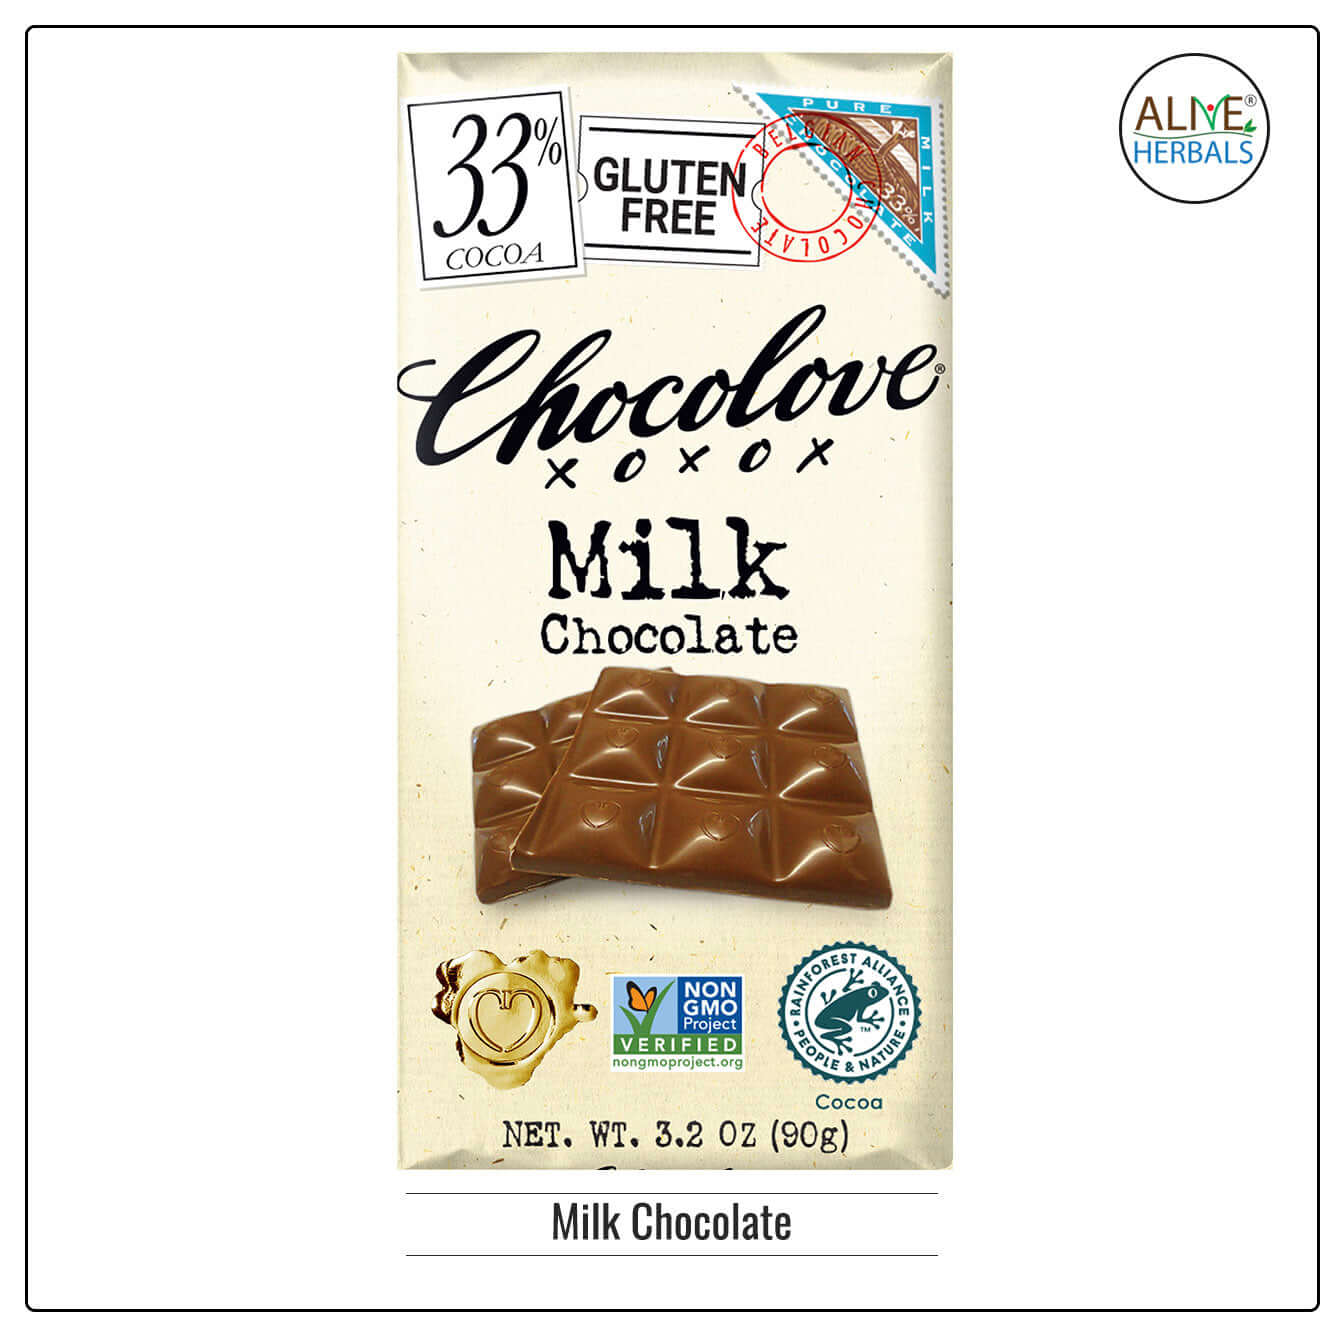 Milk Chocolate - Buy at Natural Food Store | Alive Herbals.